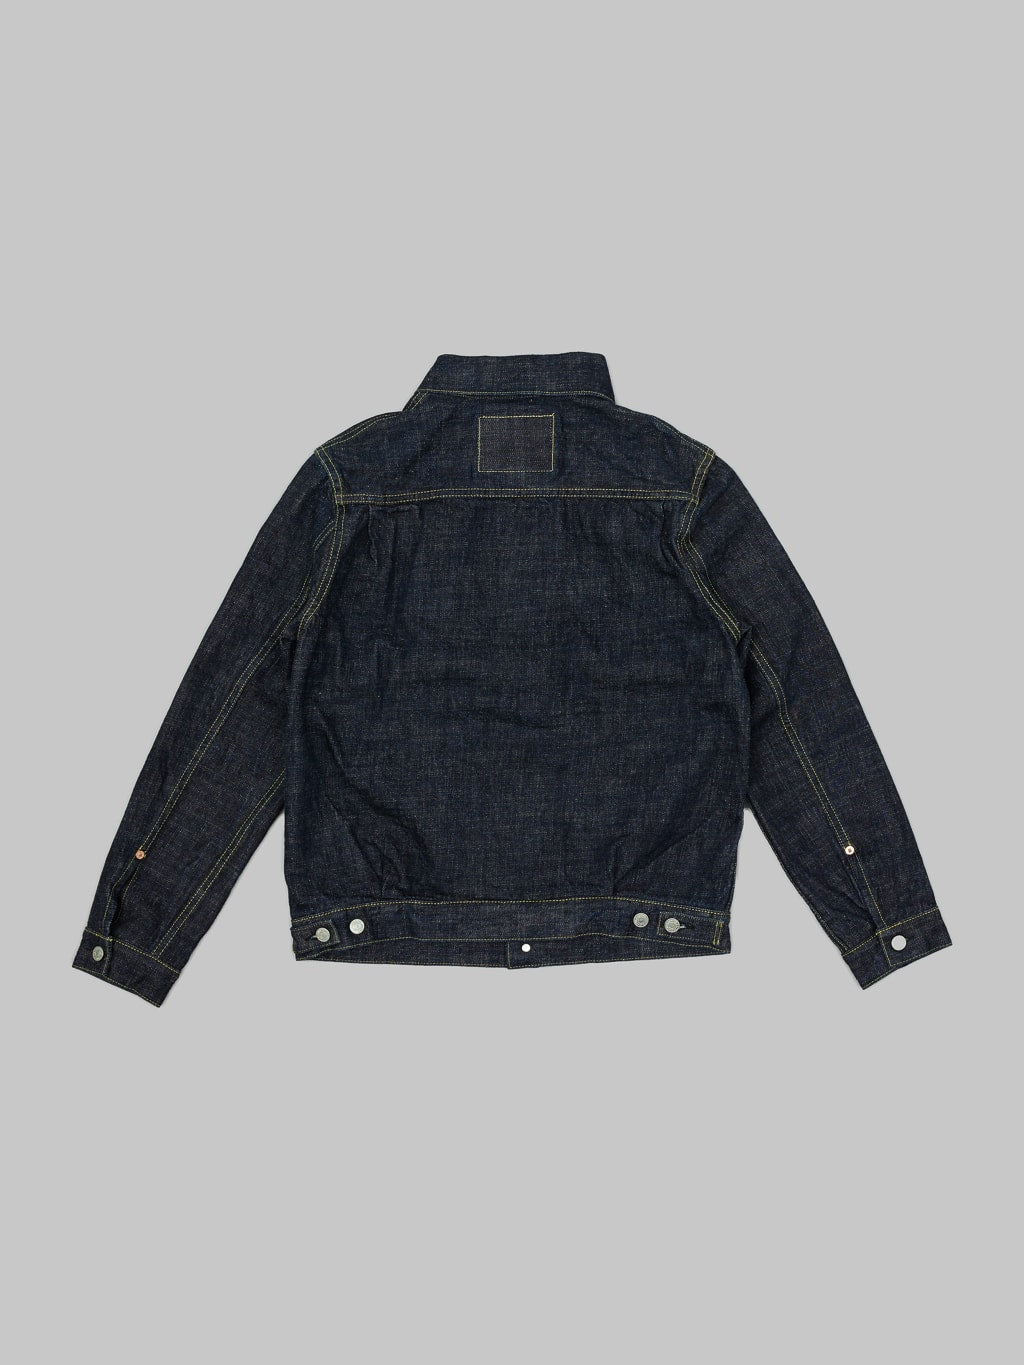 Fob factory Type III denim jacket selvedge back view